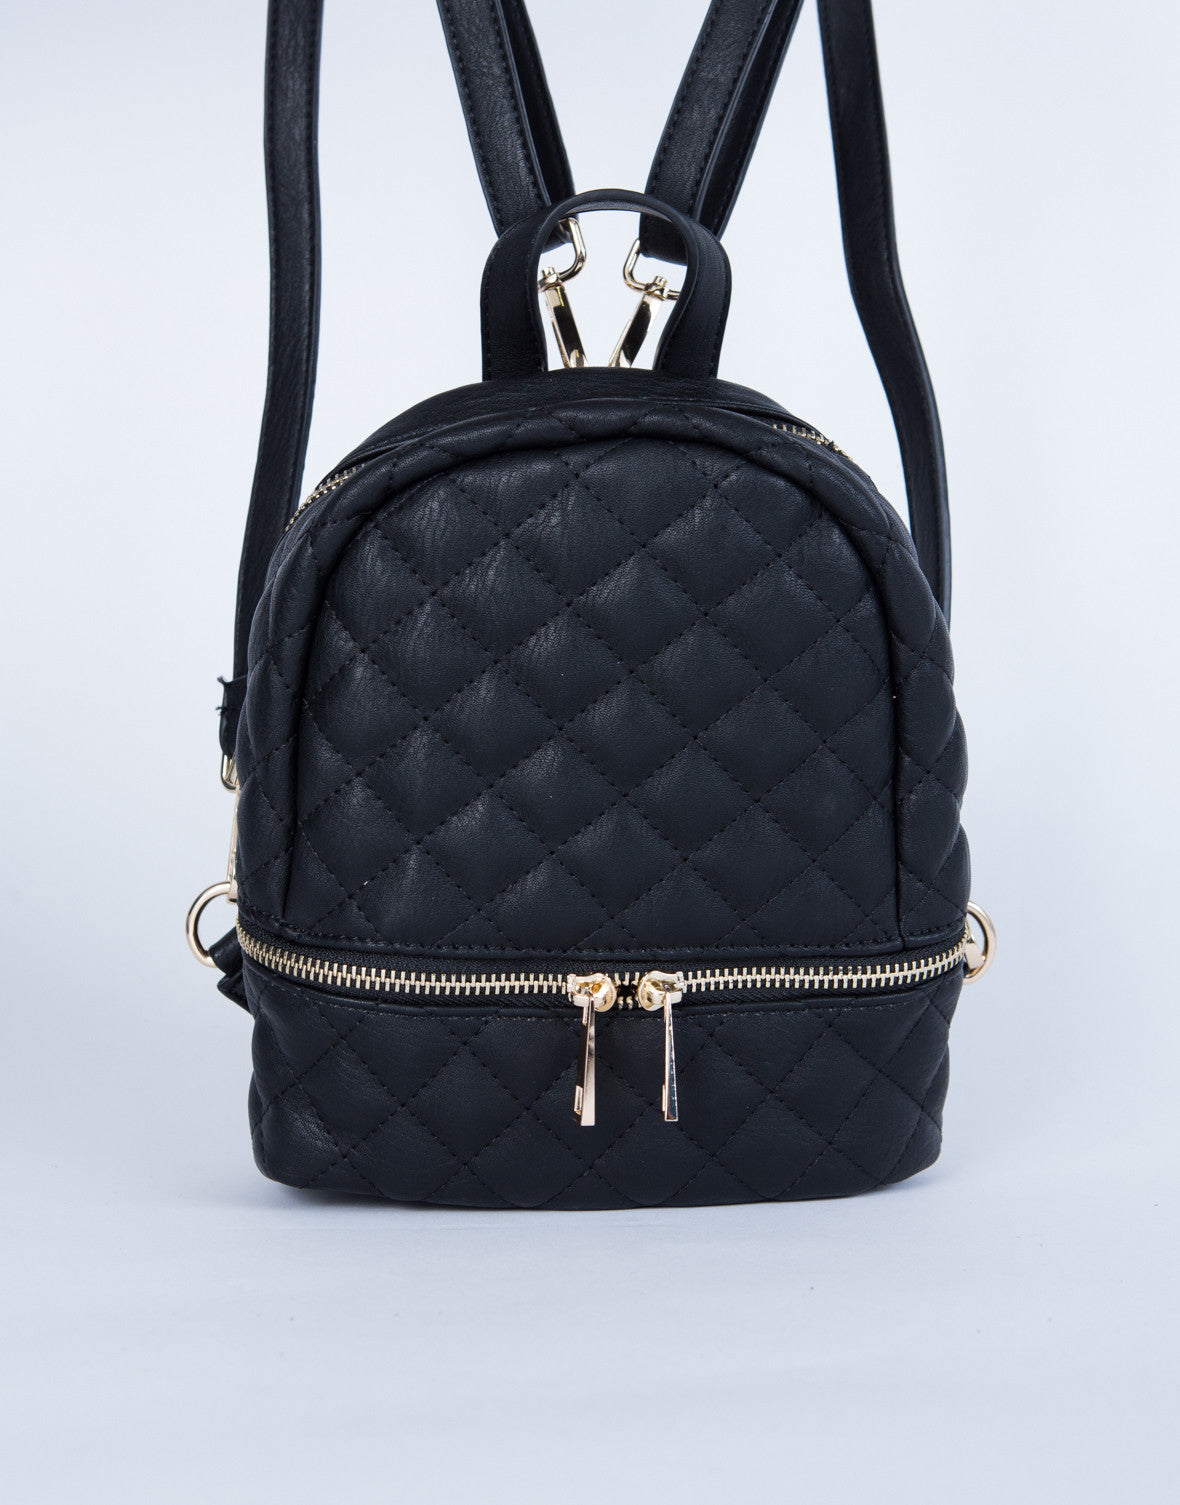 Mini Black Leather Backpack Purse | Paul Smith